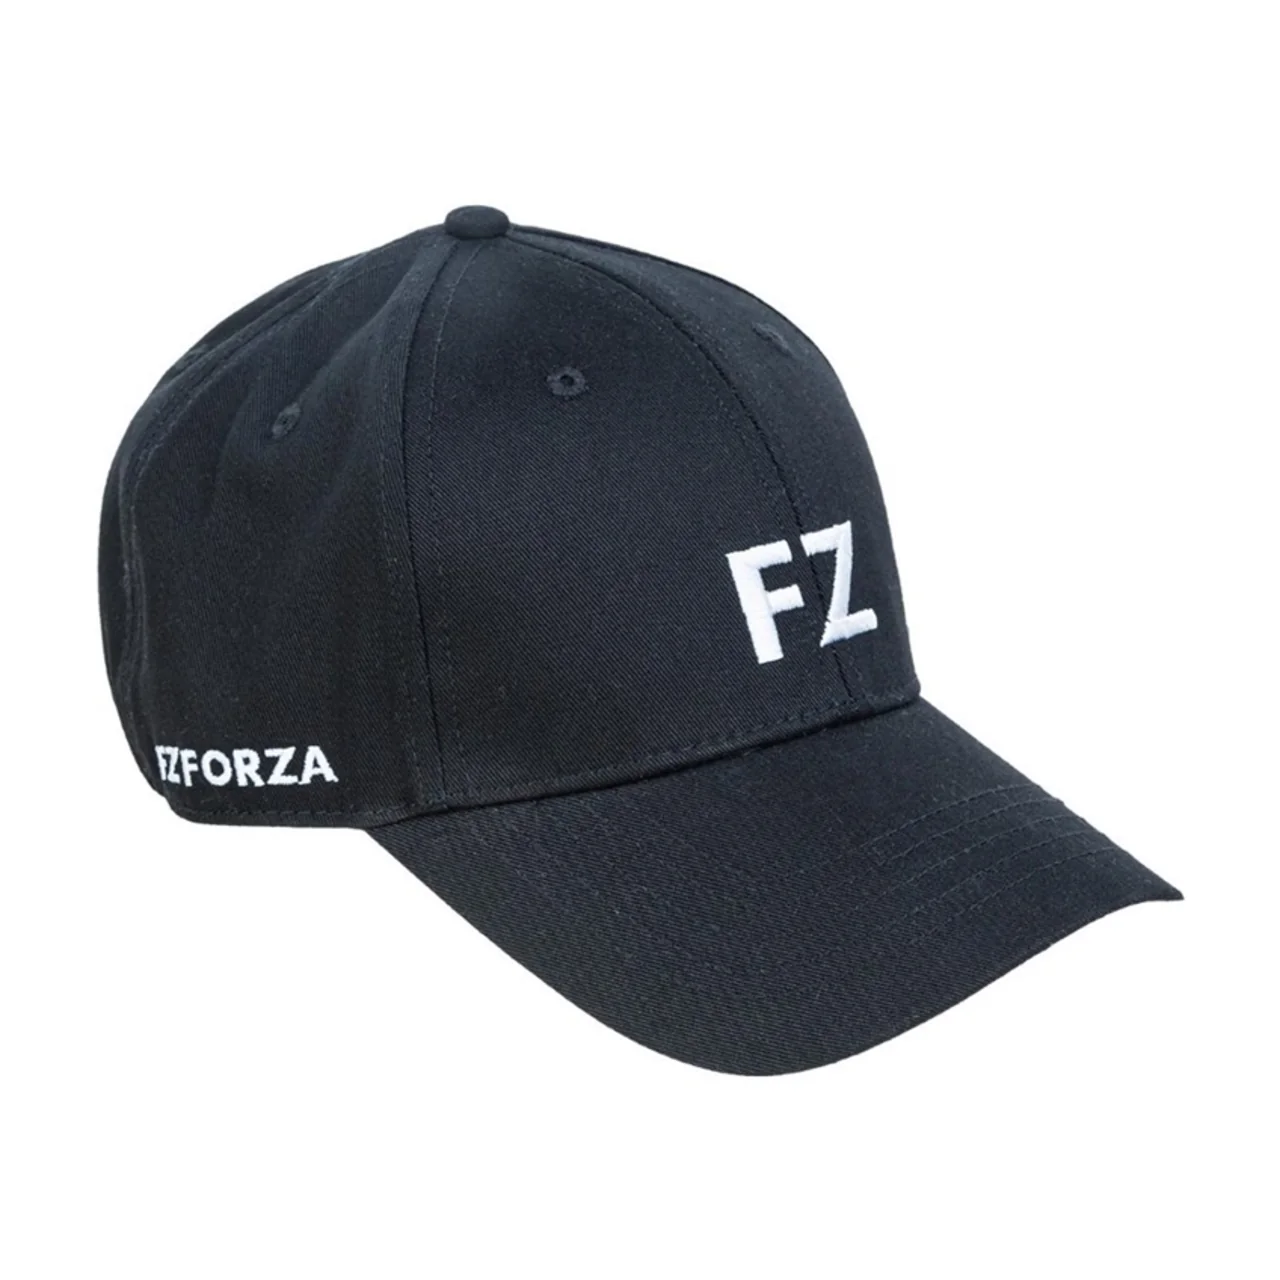 FZ Forza Logo Cap Black